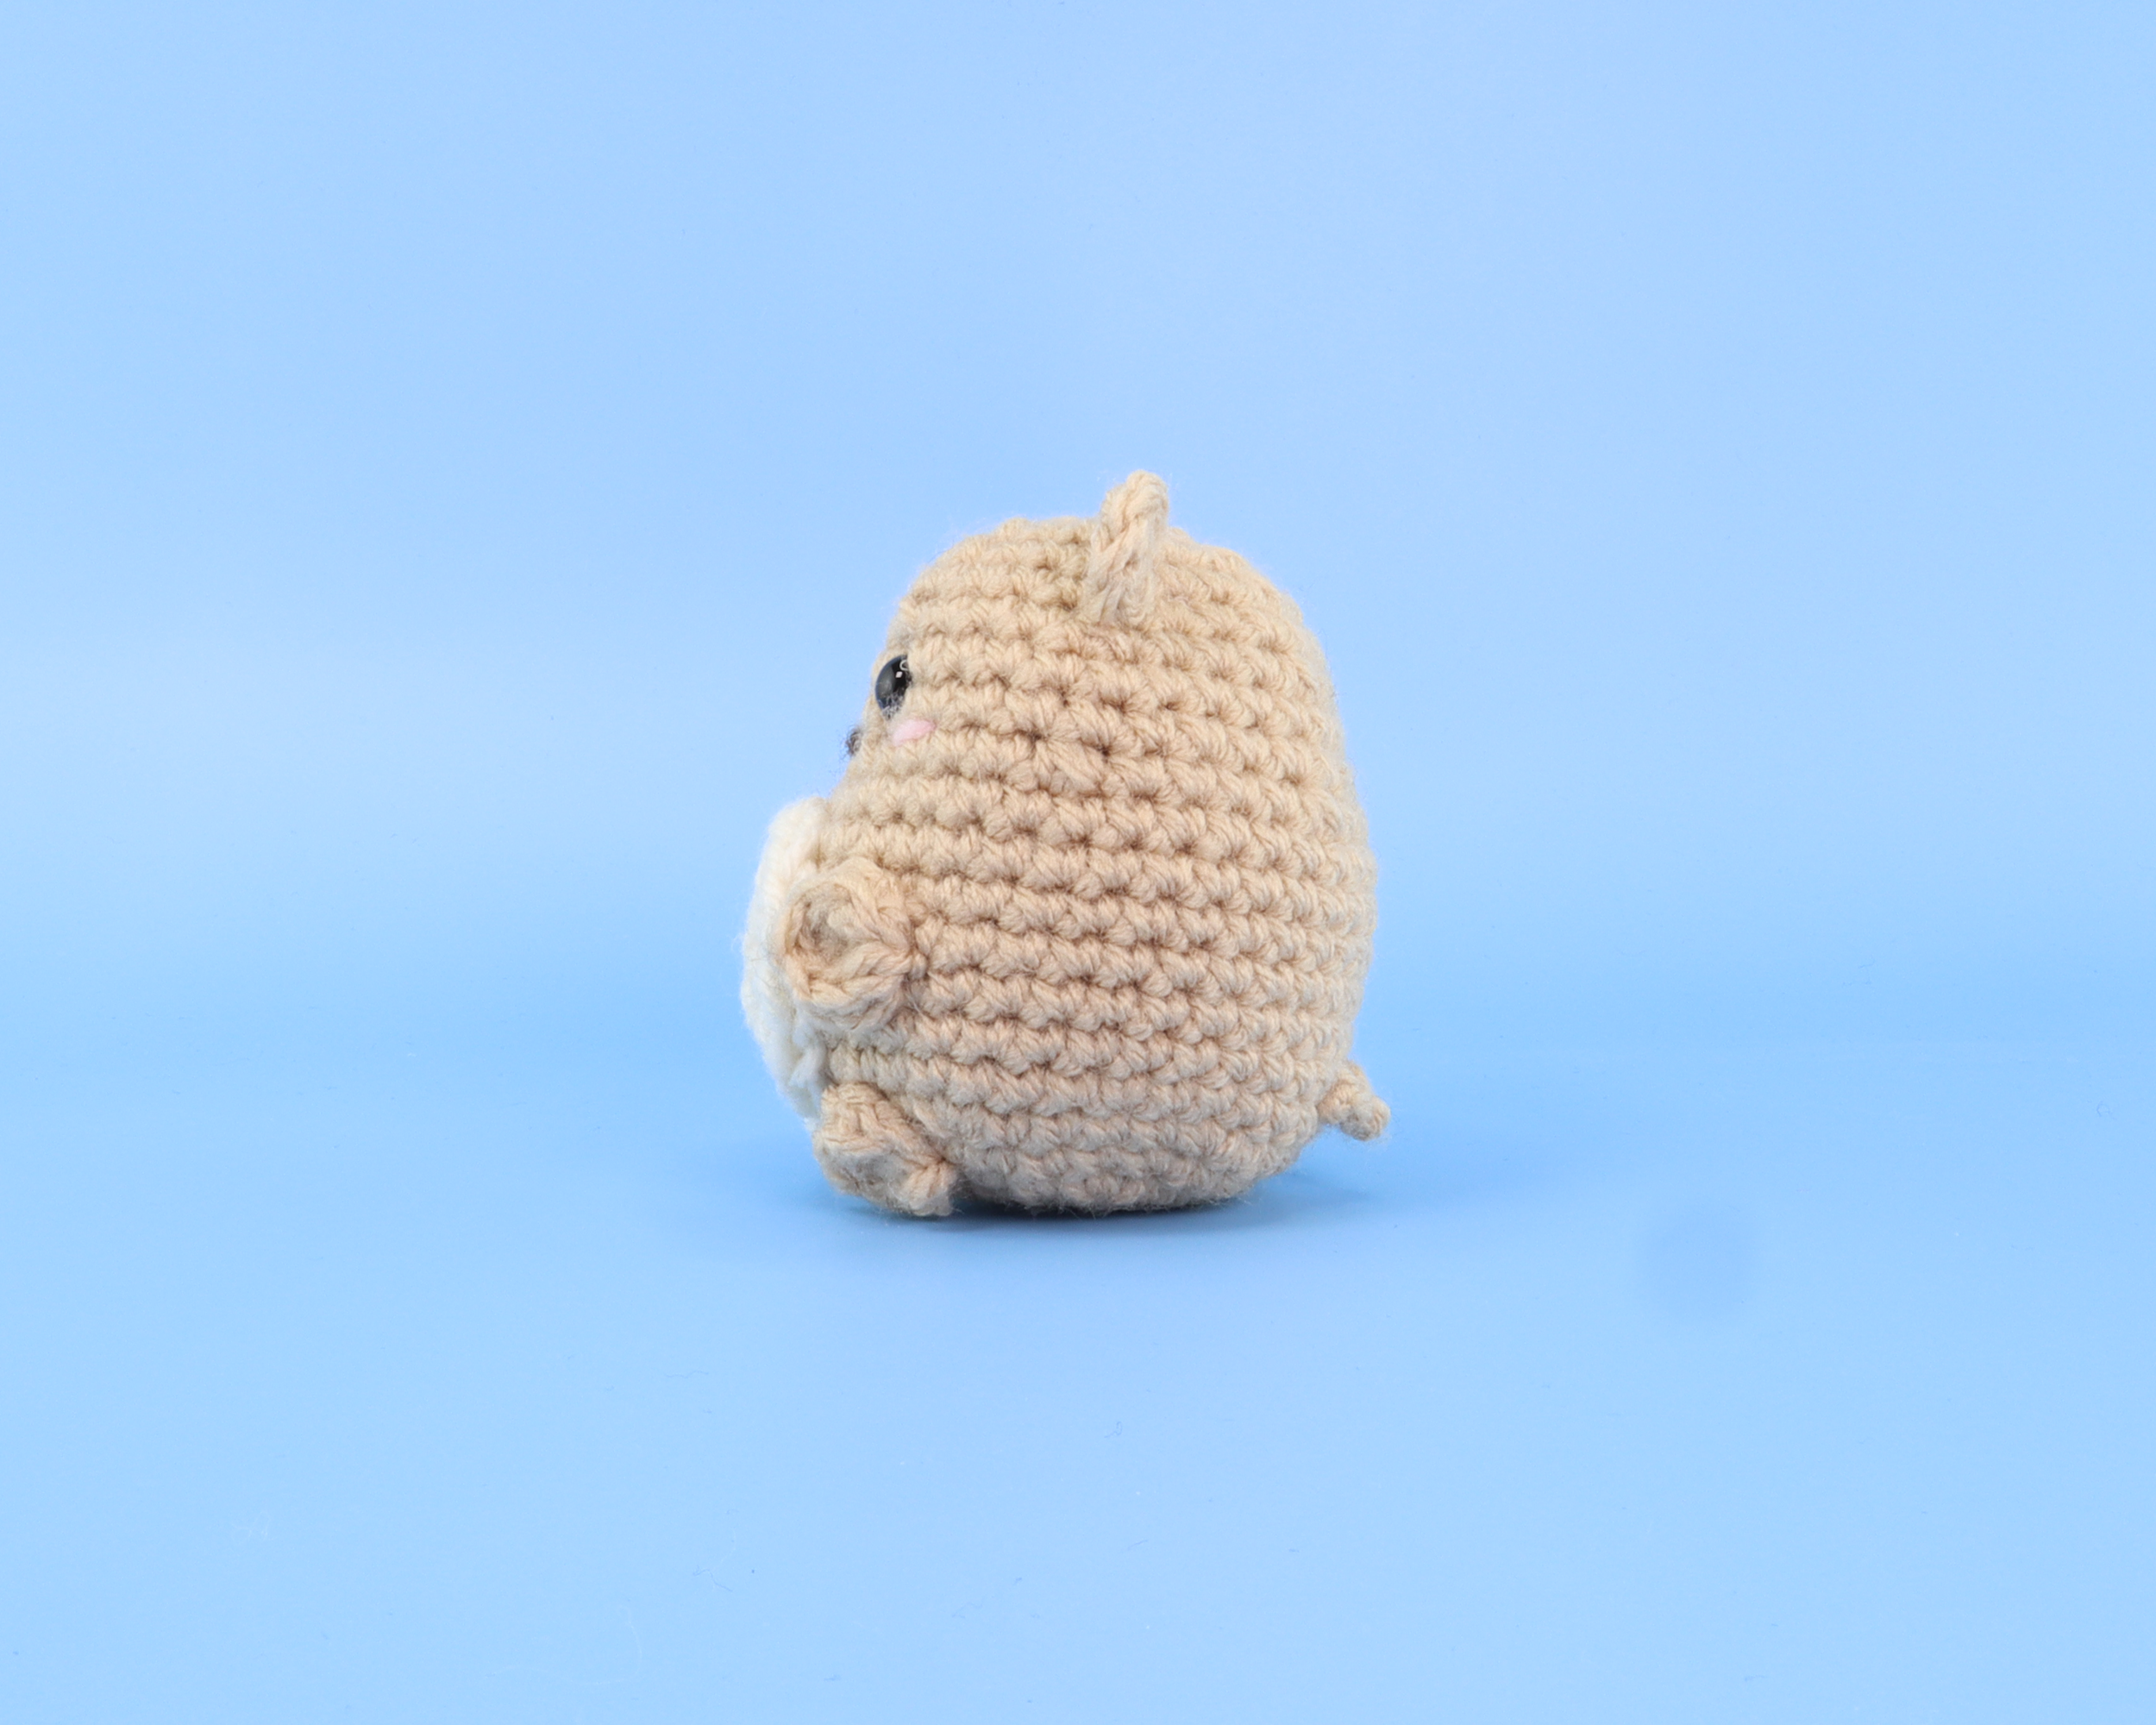 Peanut The Hamster Crochet Kit